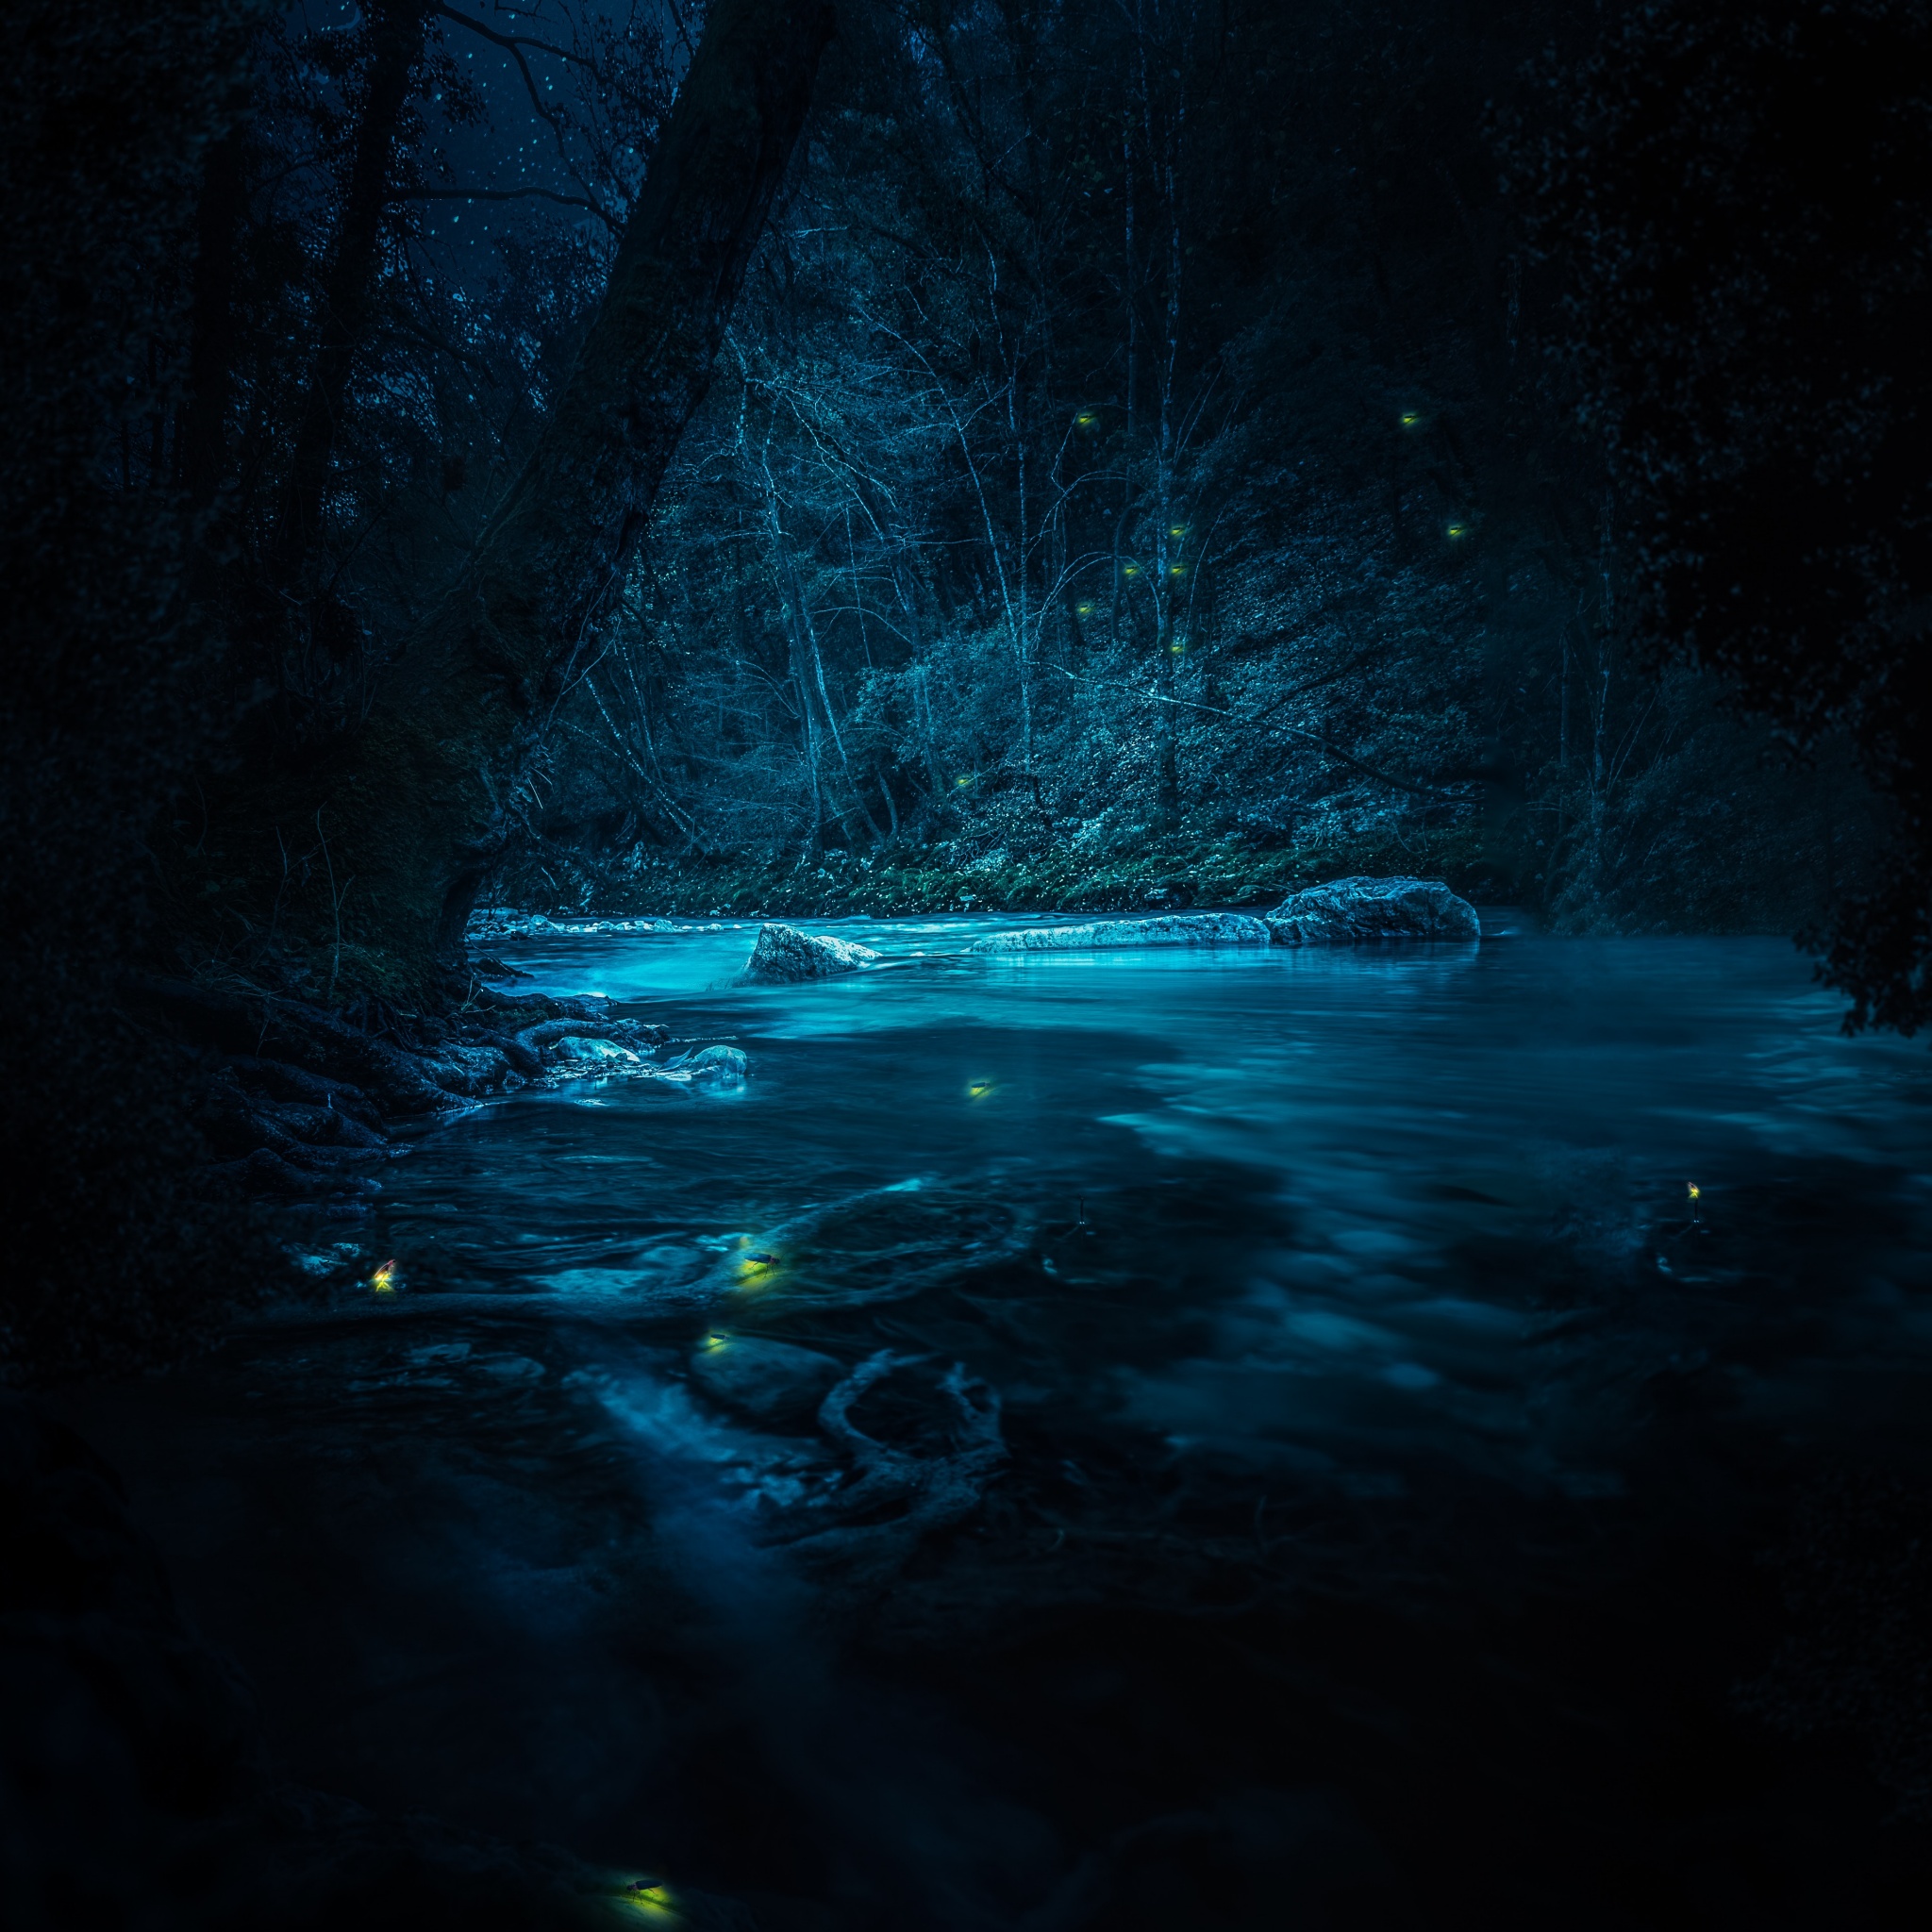 Forest 4K Wallpaper, River, Night, Dark, Magical, Crescent Moon, Blue